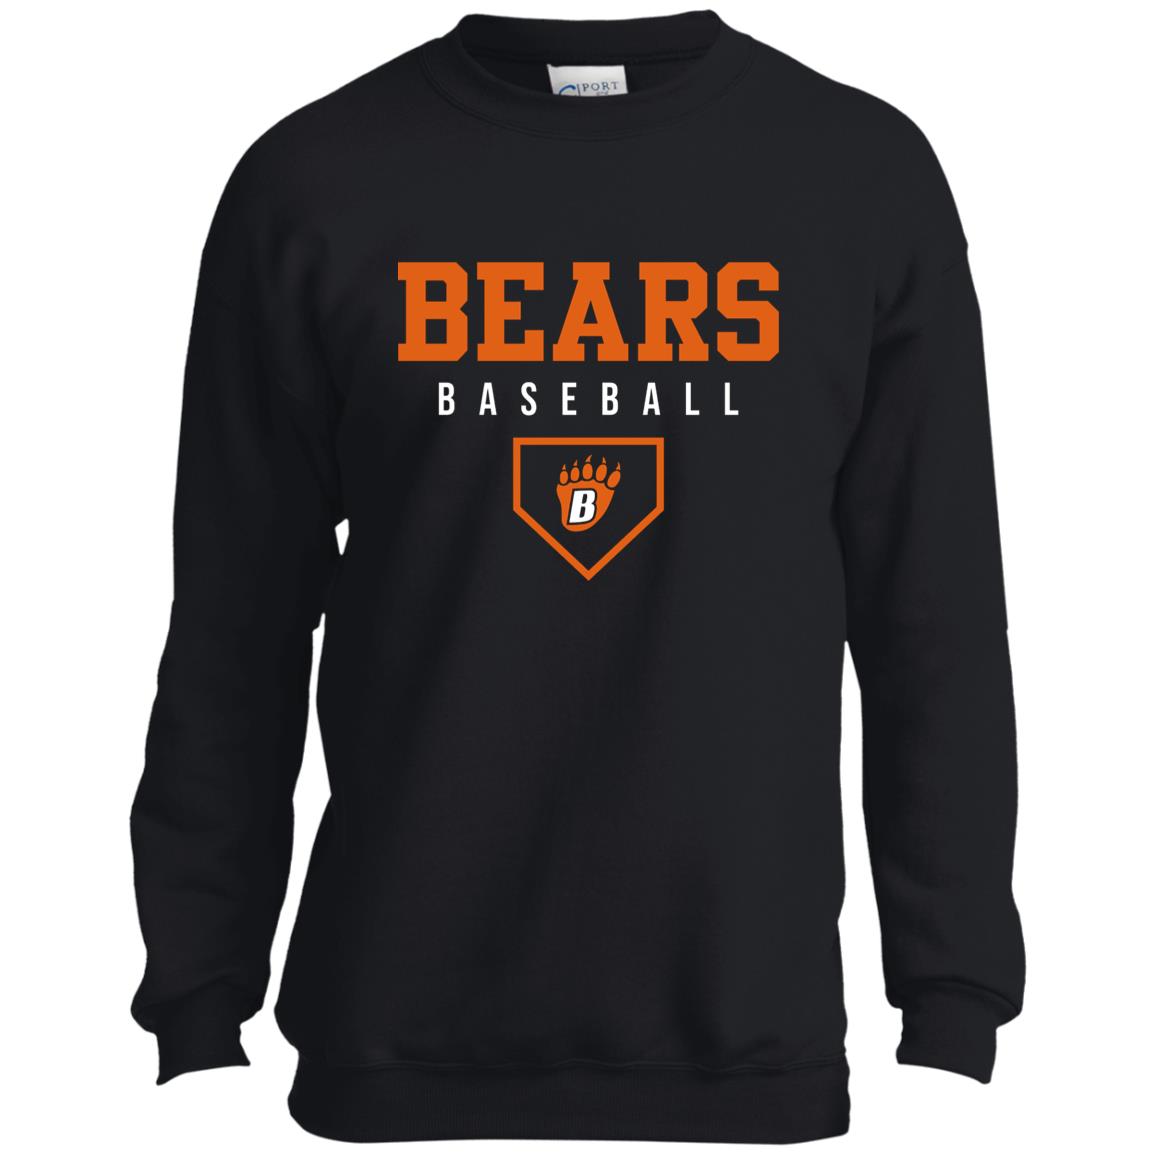 WBLHSB Bears Baseball Youth Crewneck Sweatshirt